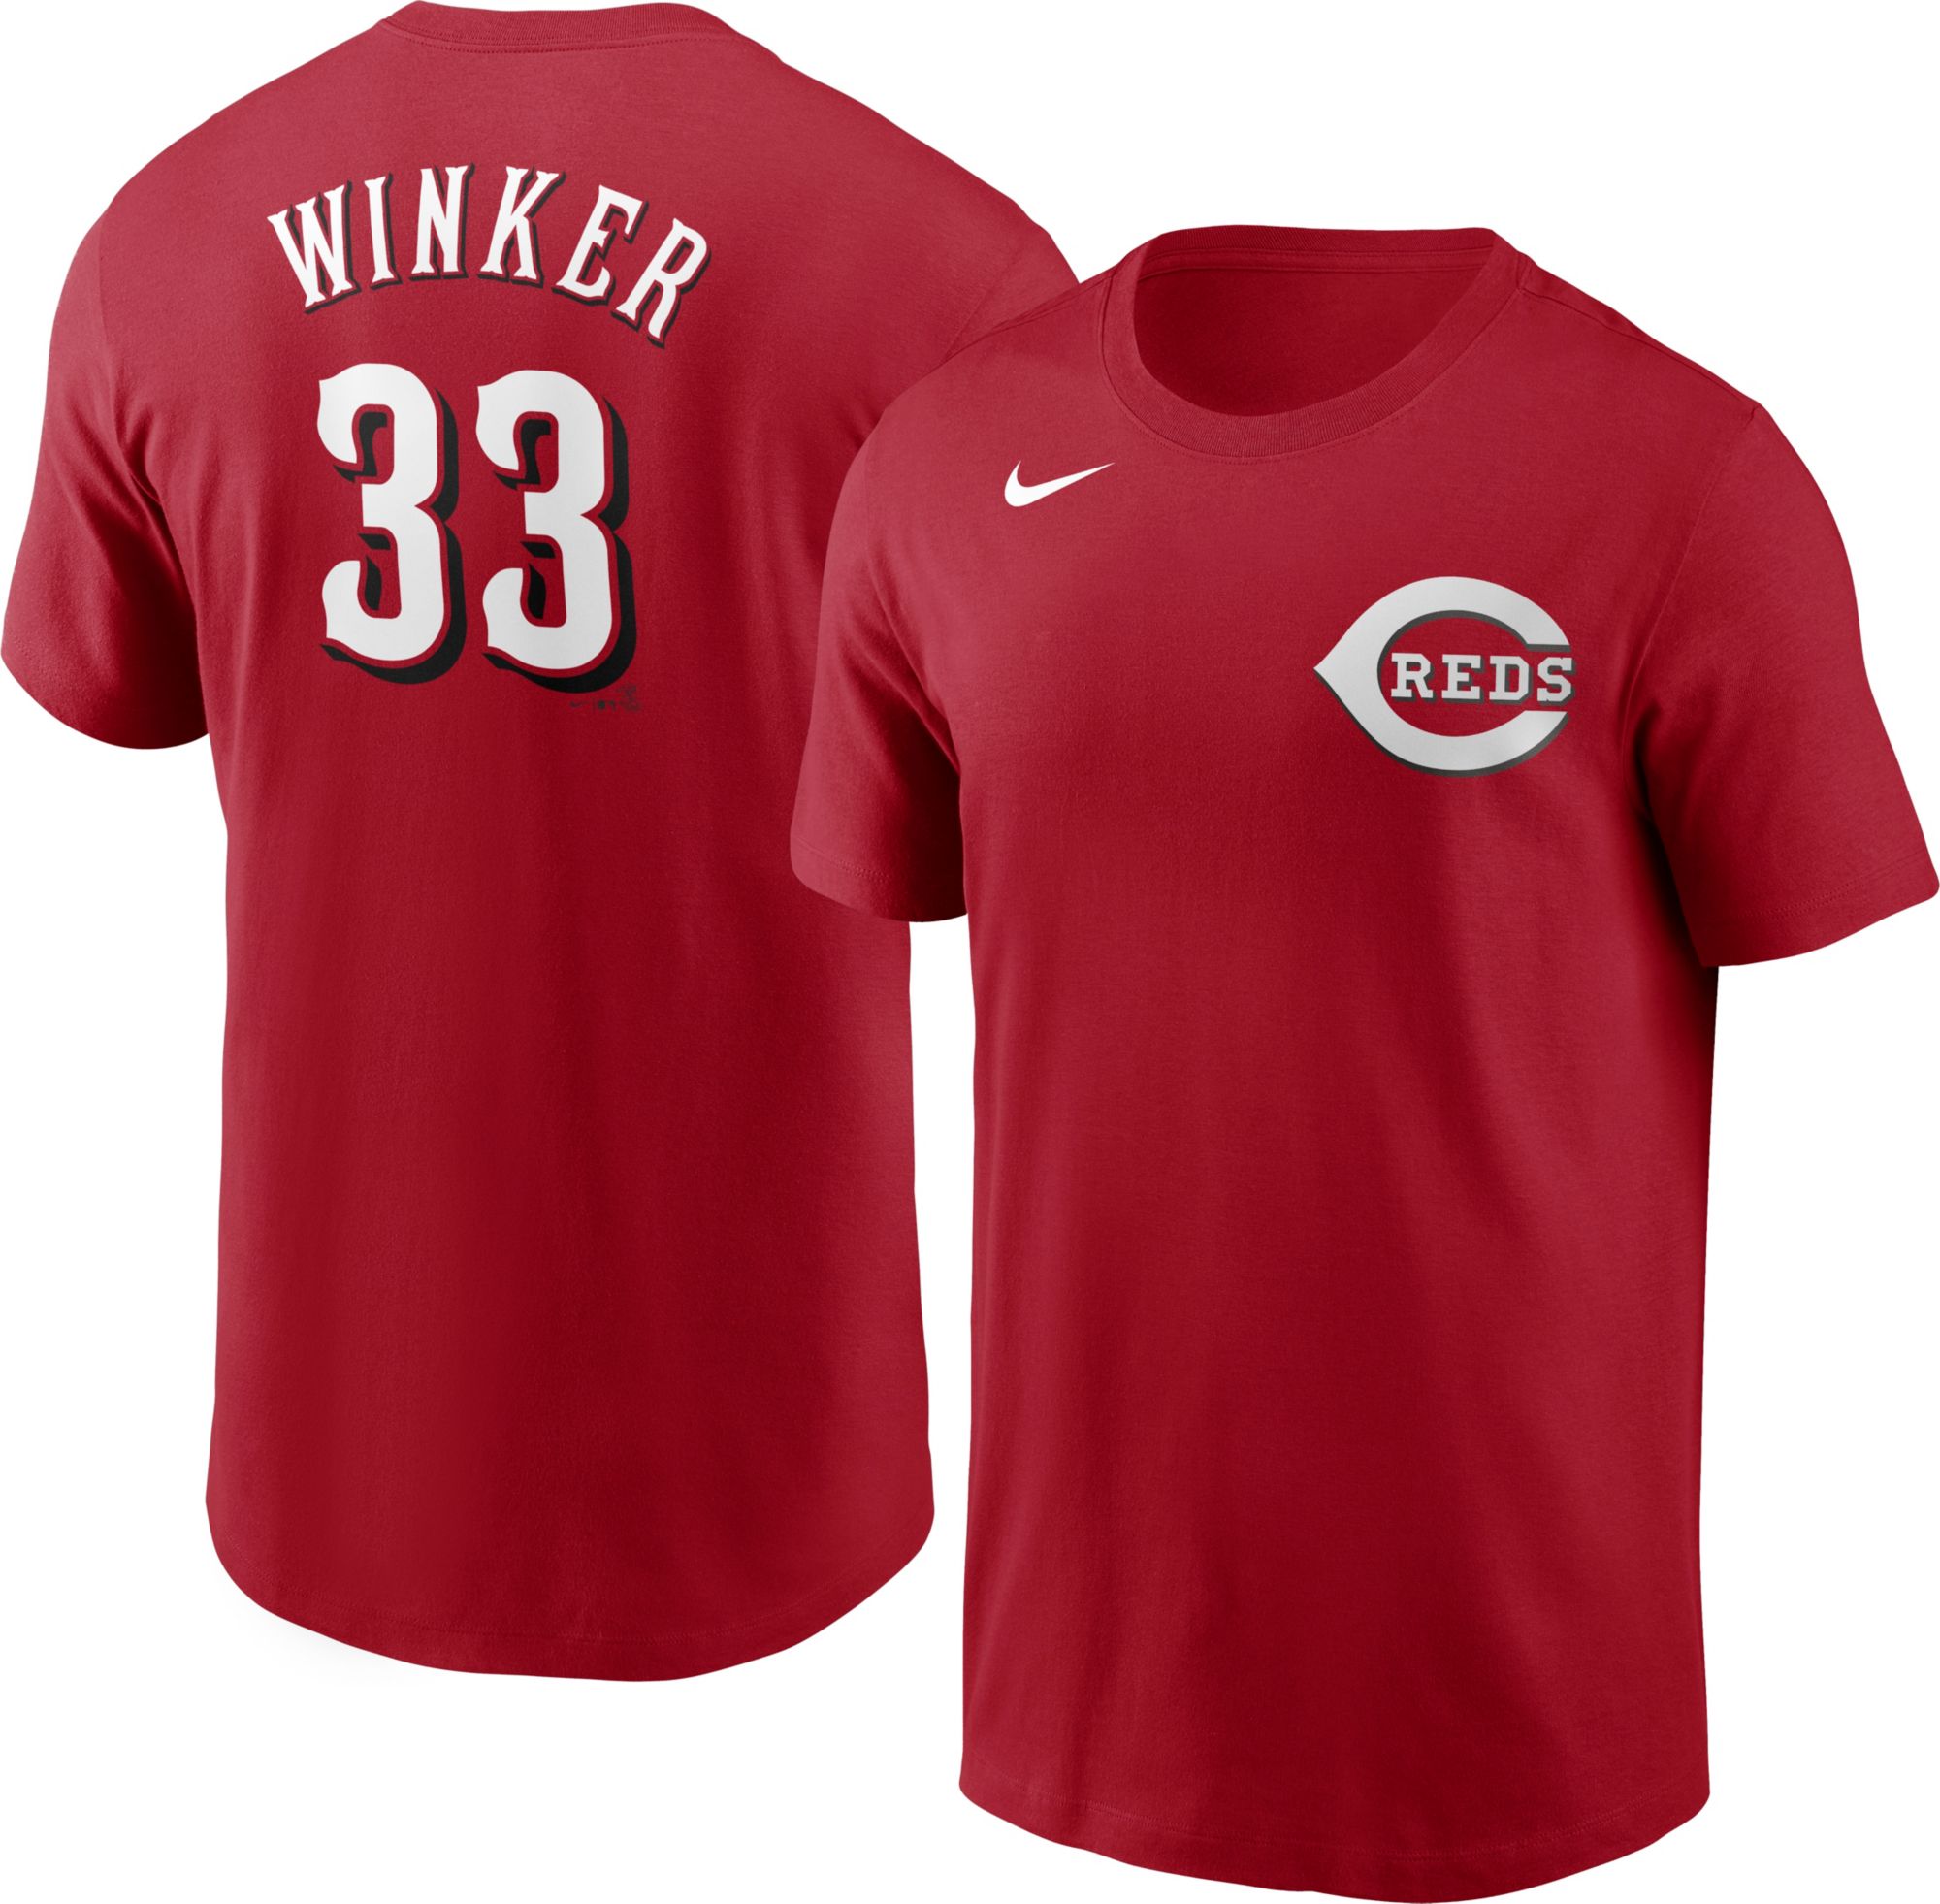 Nike / Men's Cincinnati Reds Jesse Winker #33 Red T-Shirt